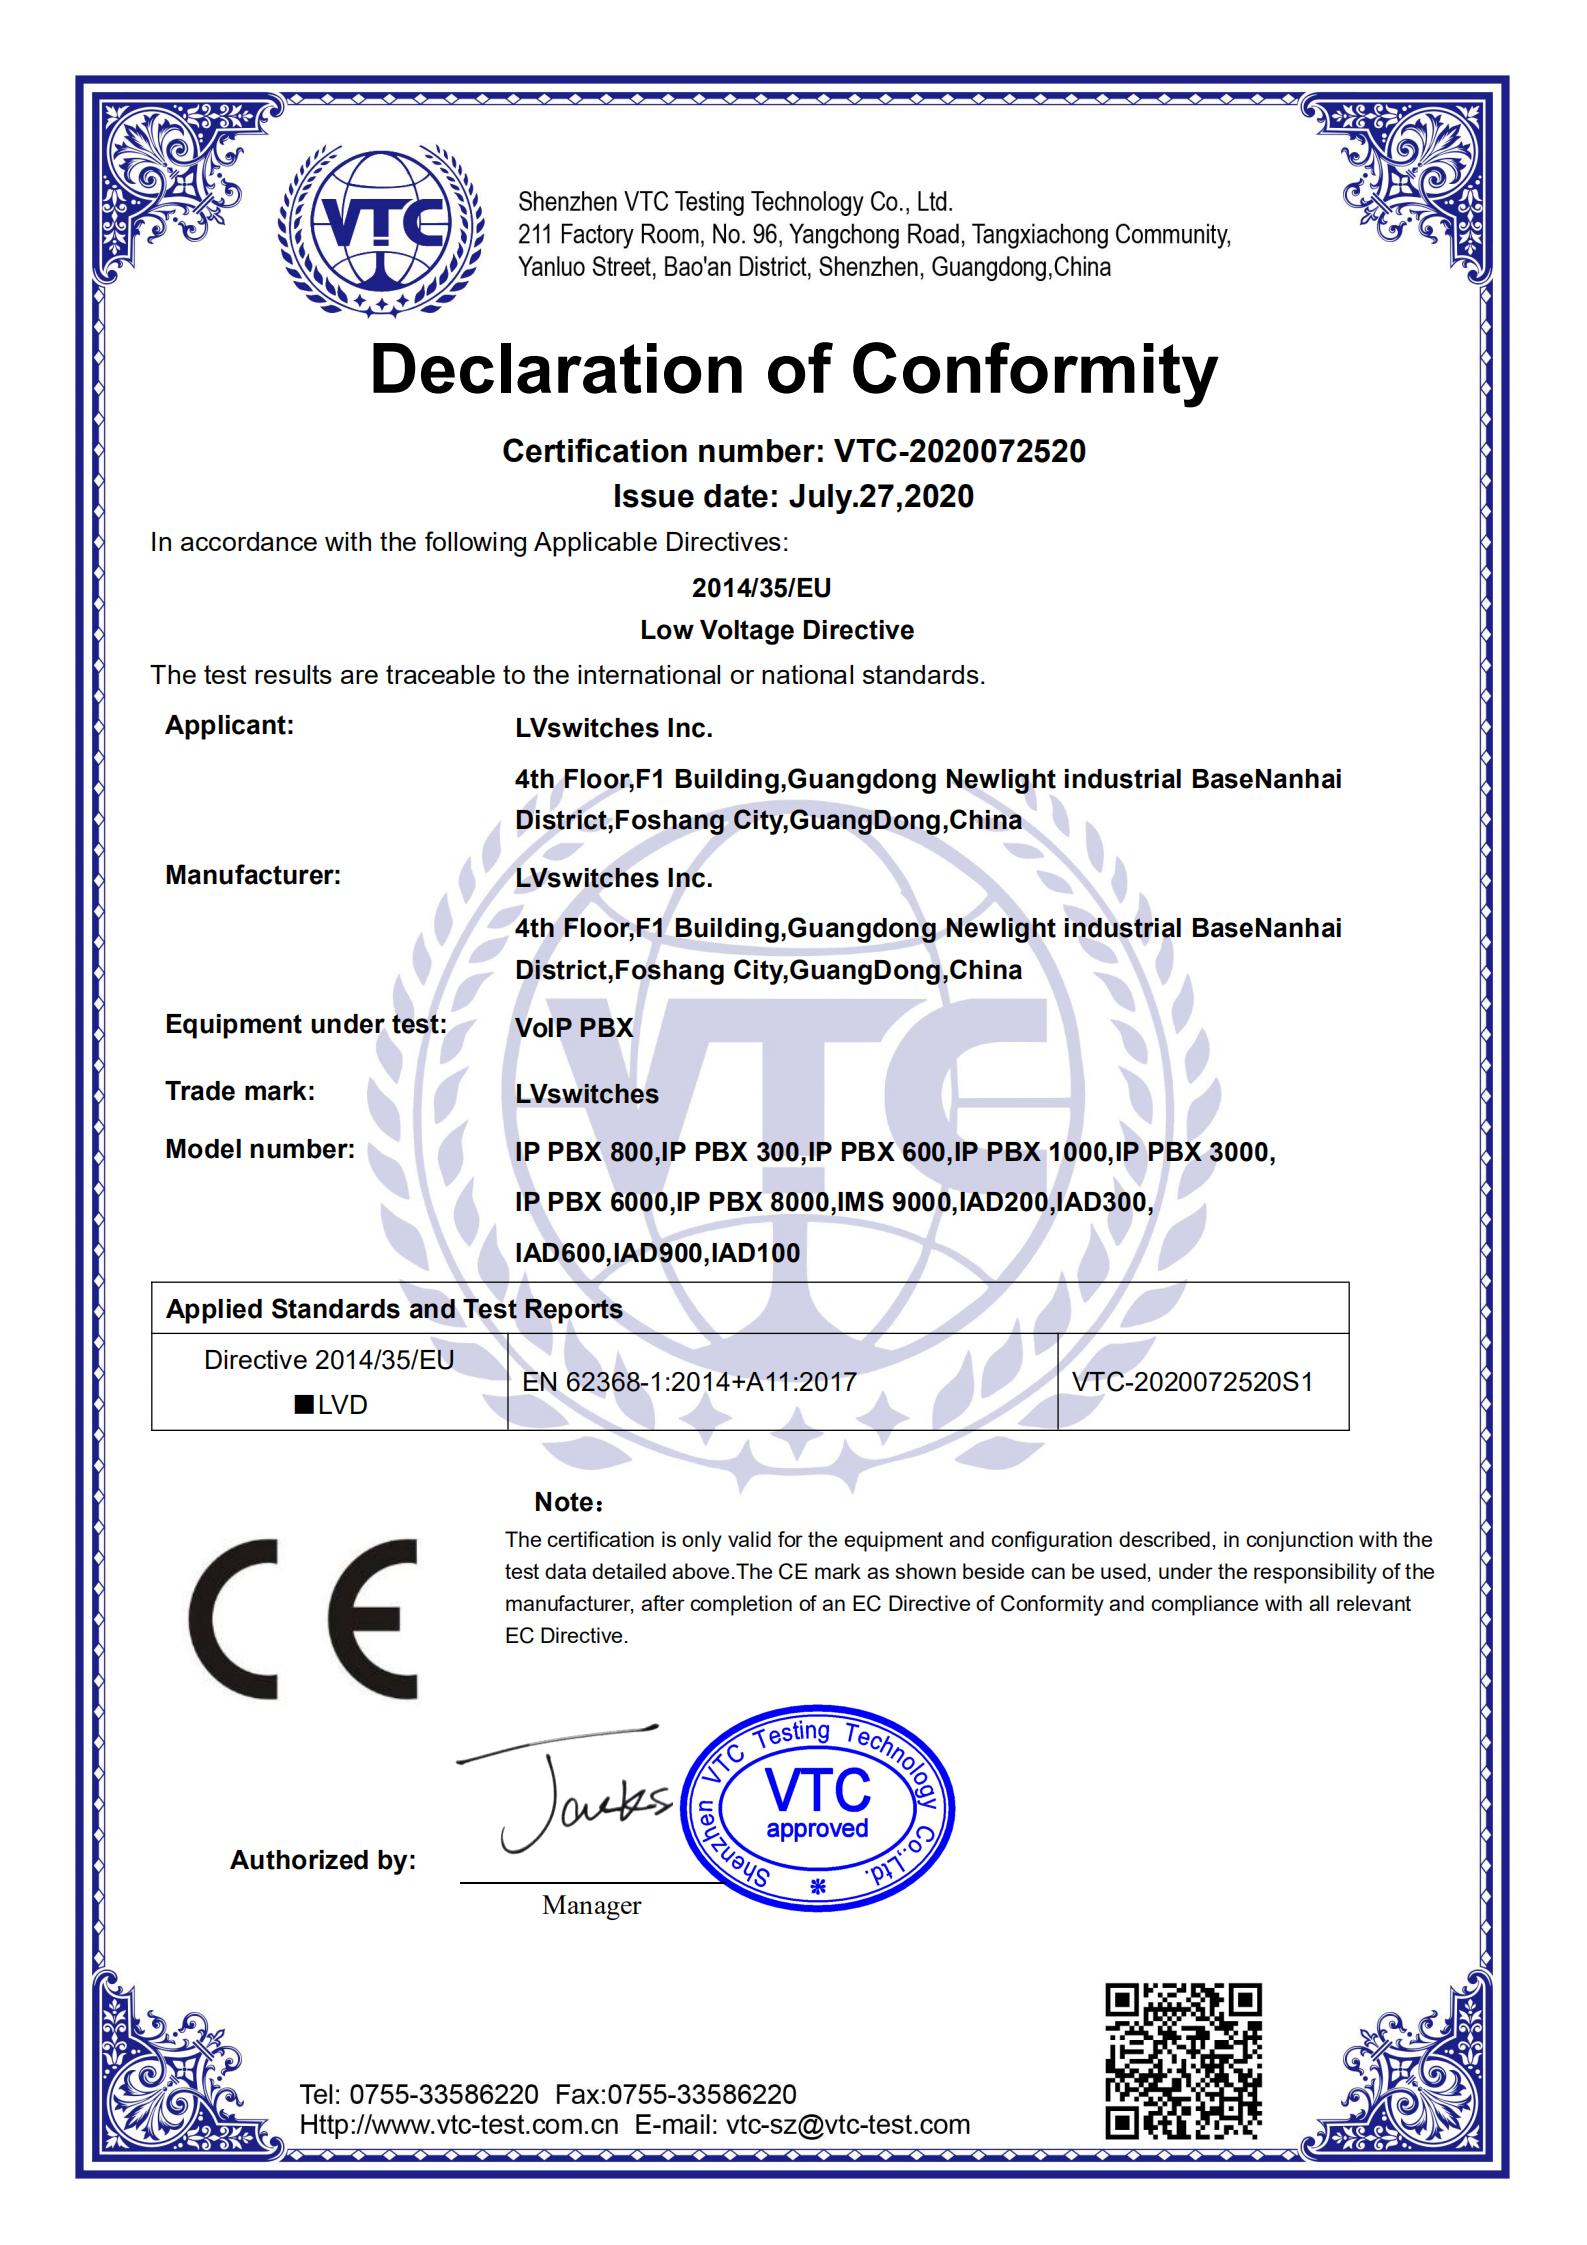 CE LVD Certificate_VTC - Certificado en Inglés